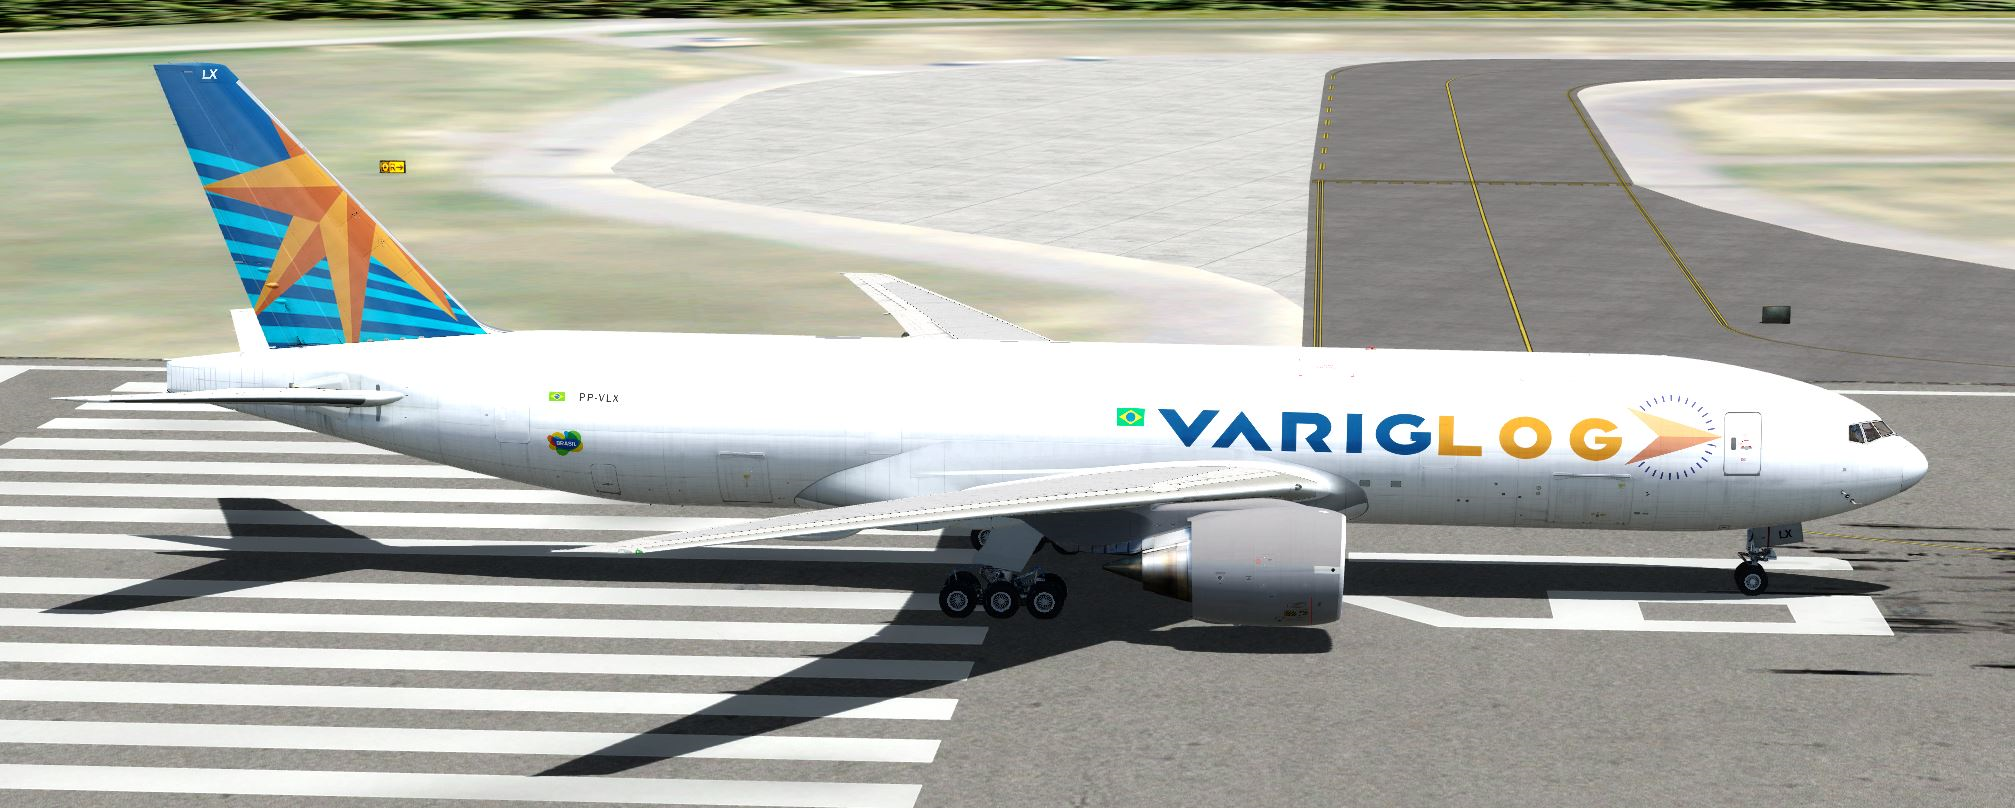 CS 777-200 VarigLog PP-VLX